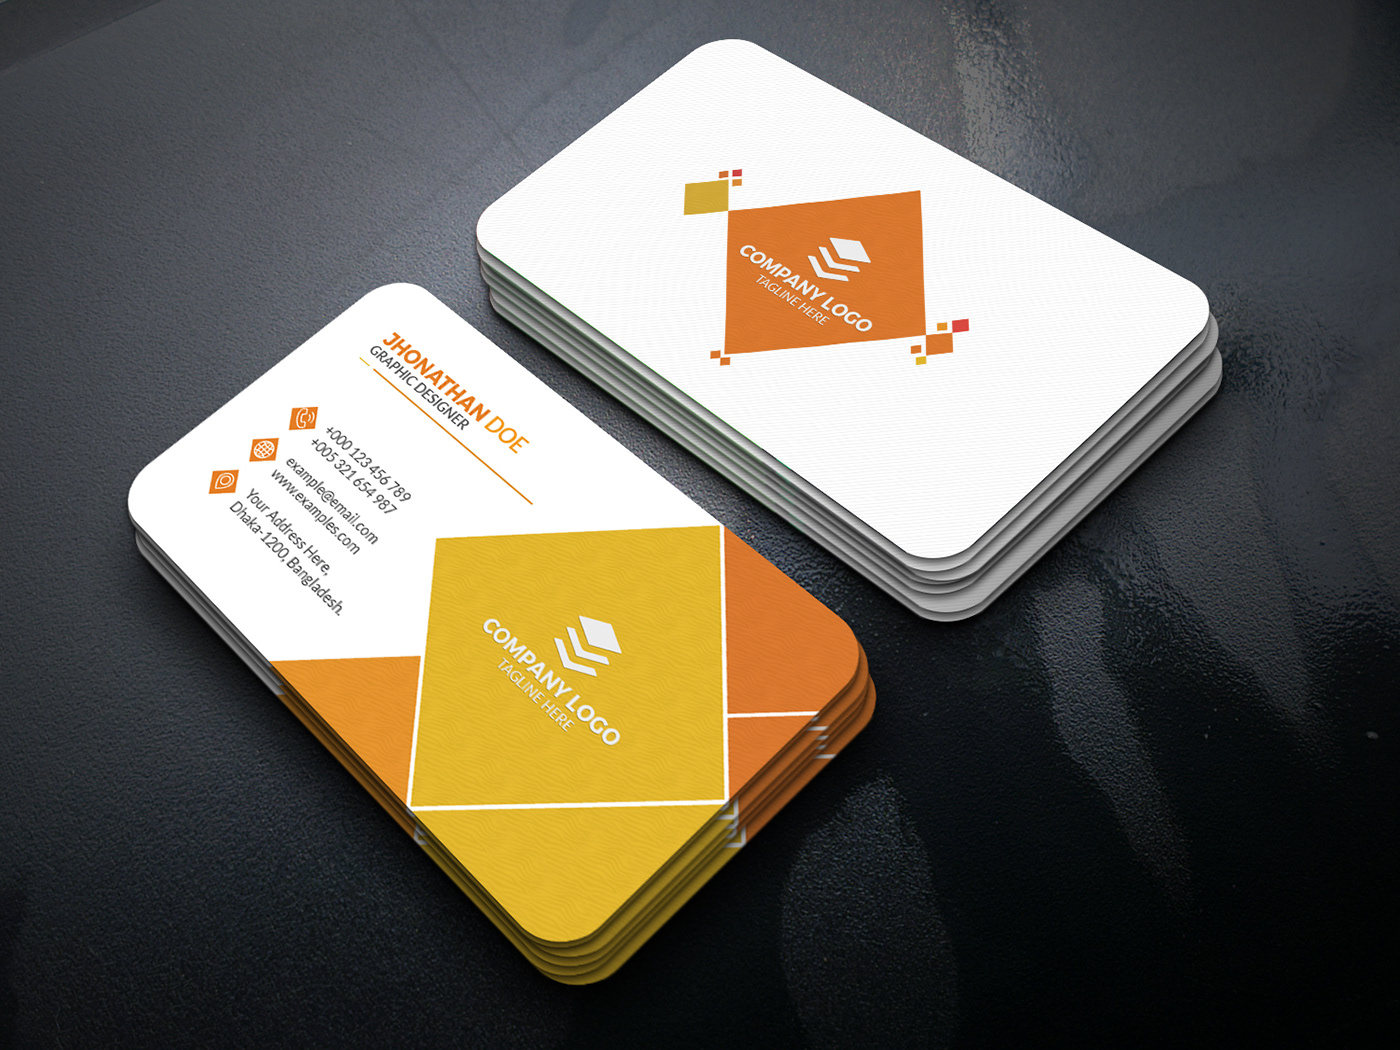 Business card design business card design ideas best business card Designs 2017 Free Business Cards templates business card template free download free